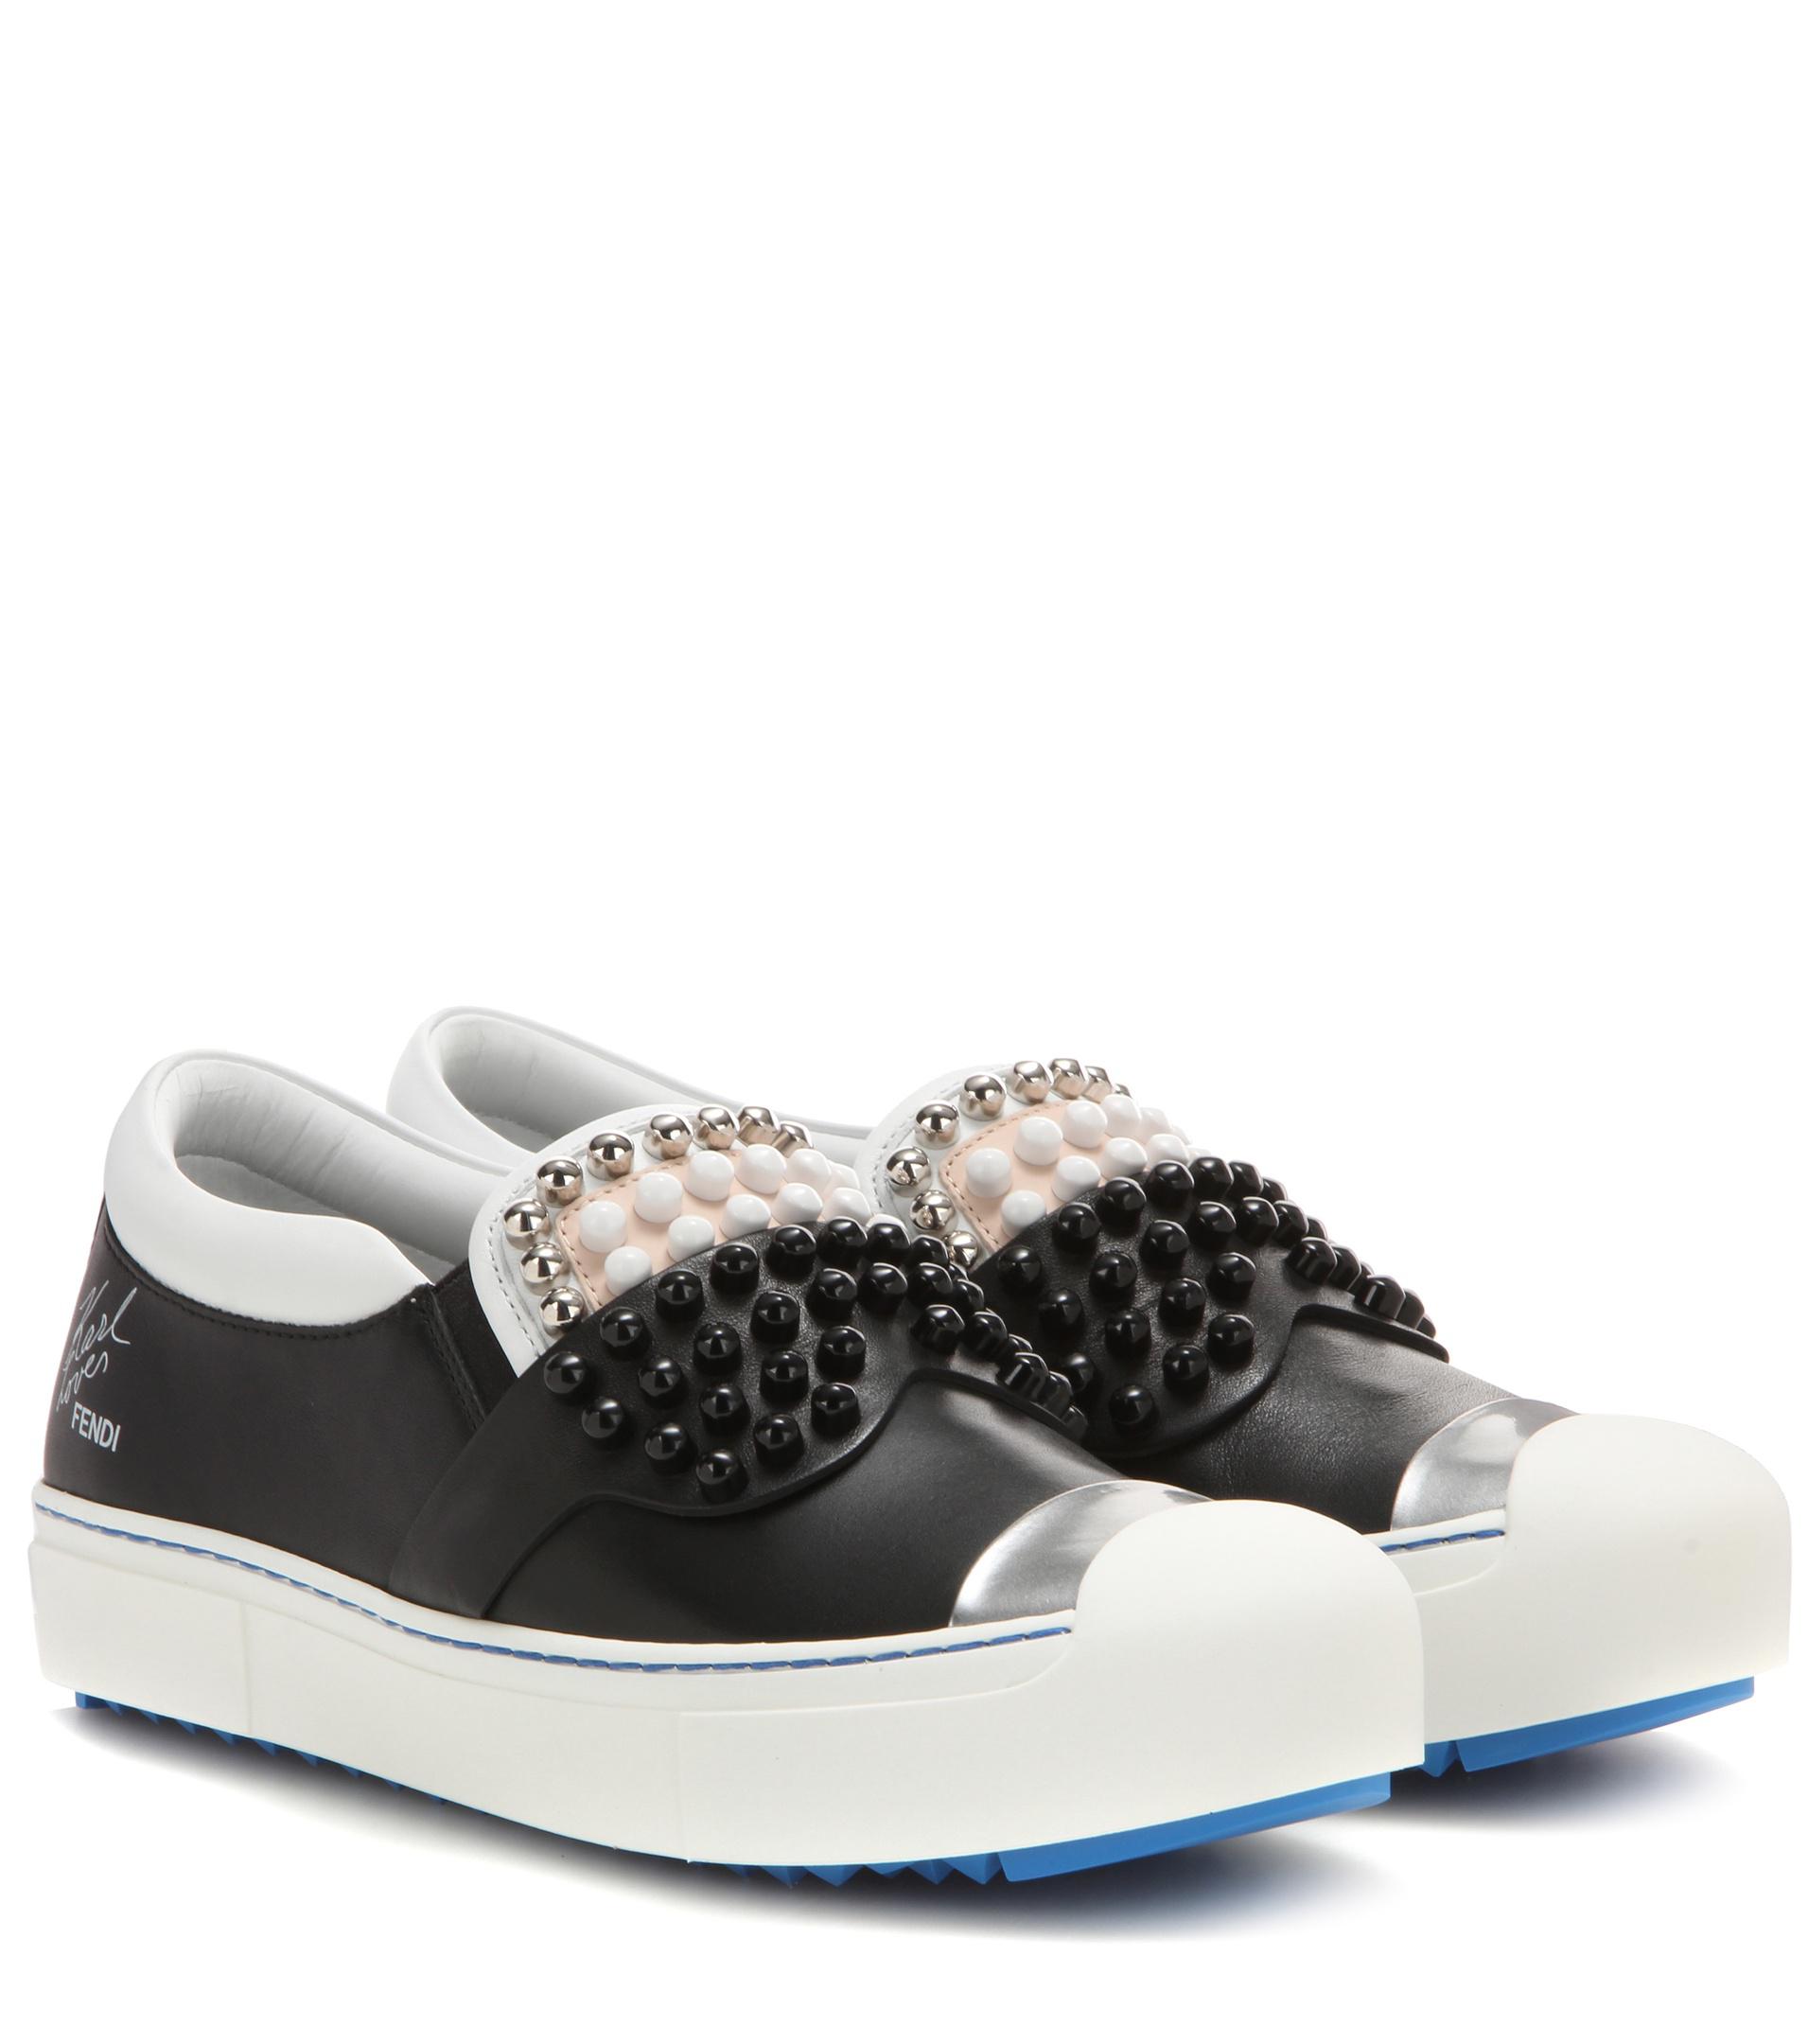 Fendi Embellished Slip-on Leather Sneakers in Black - Lyst